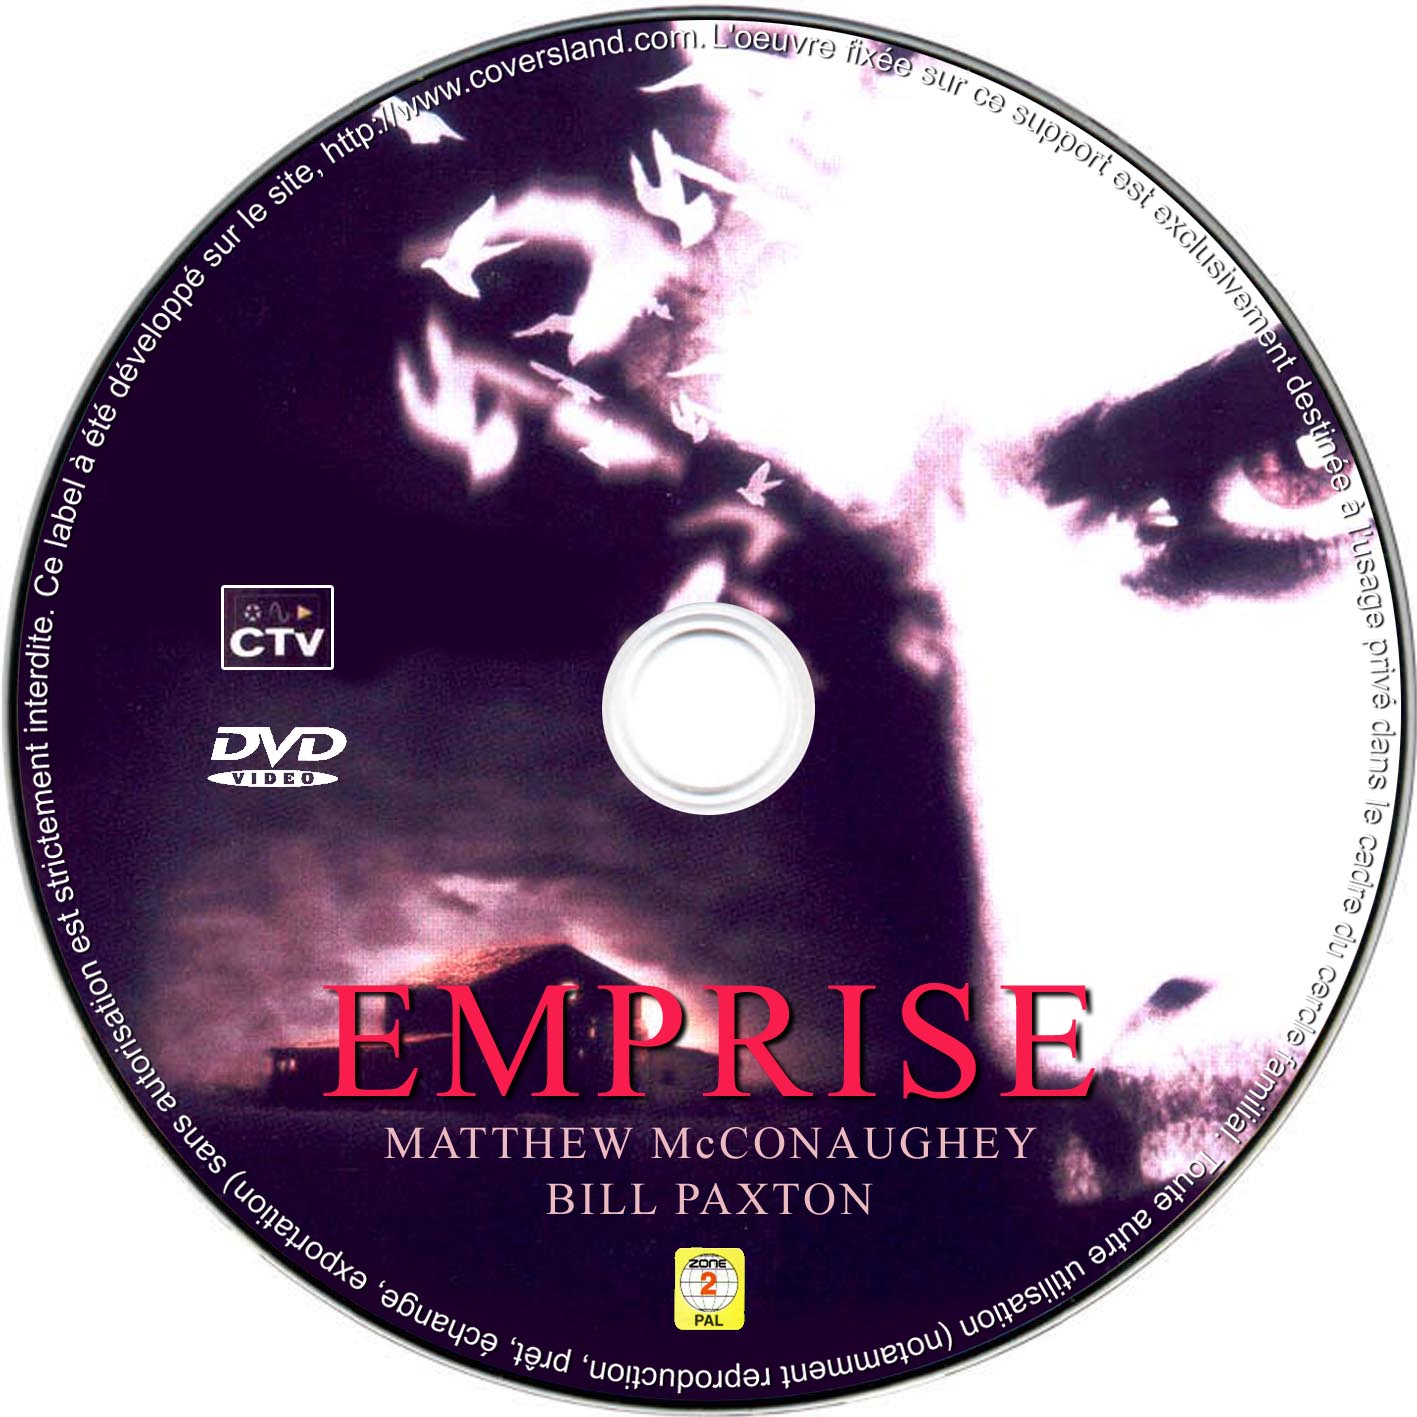 Emprise (DVD)